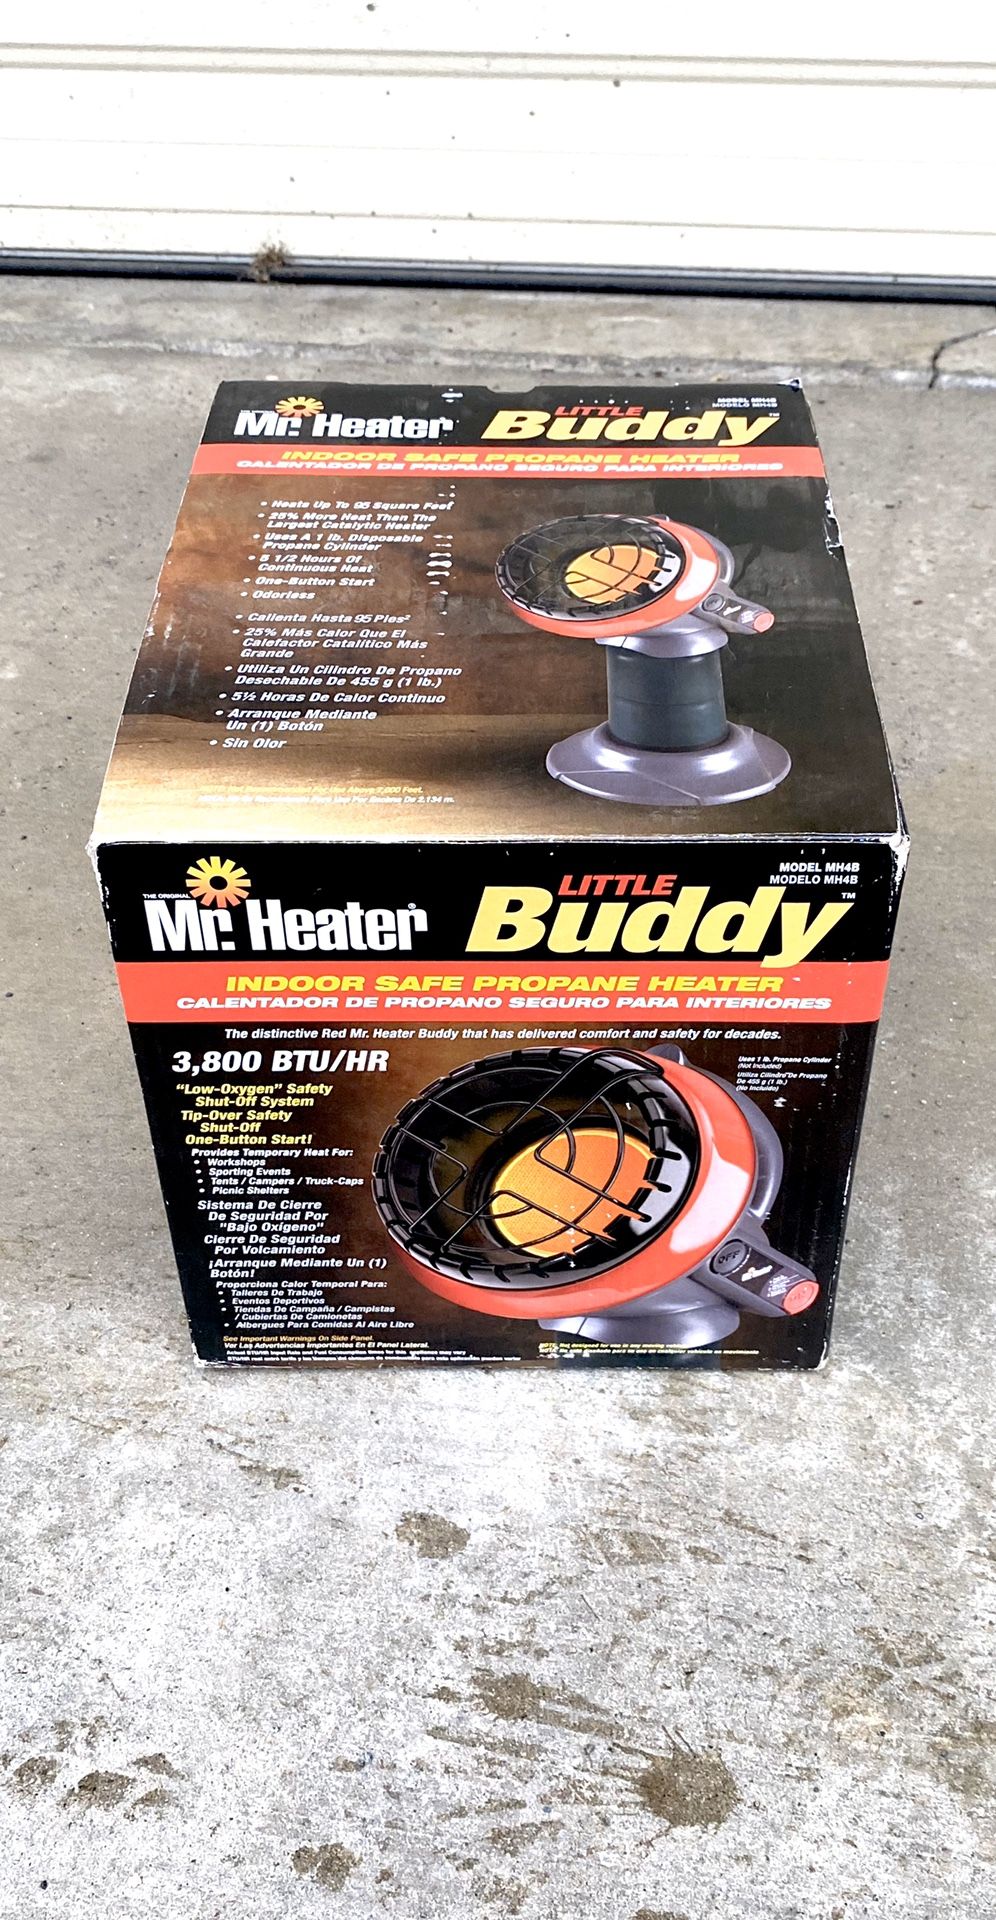 Mr. Heater Little Buddy Indoor Propane Gas